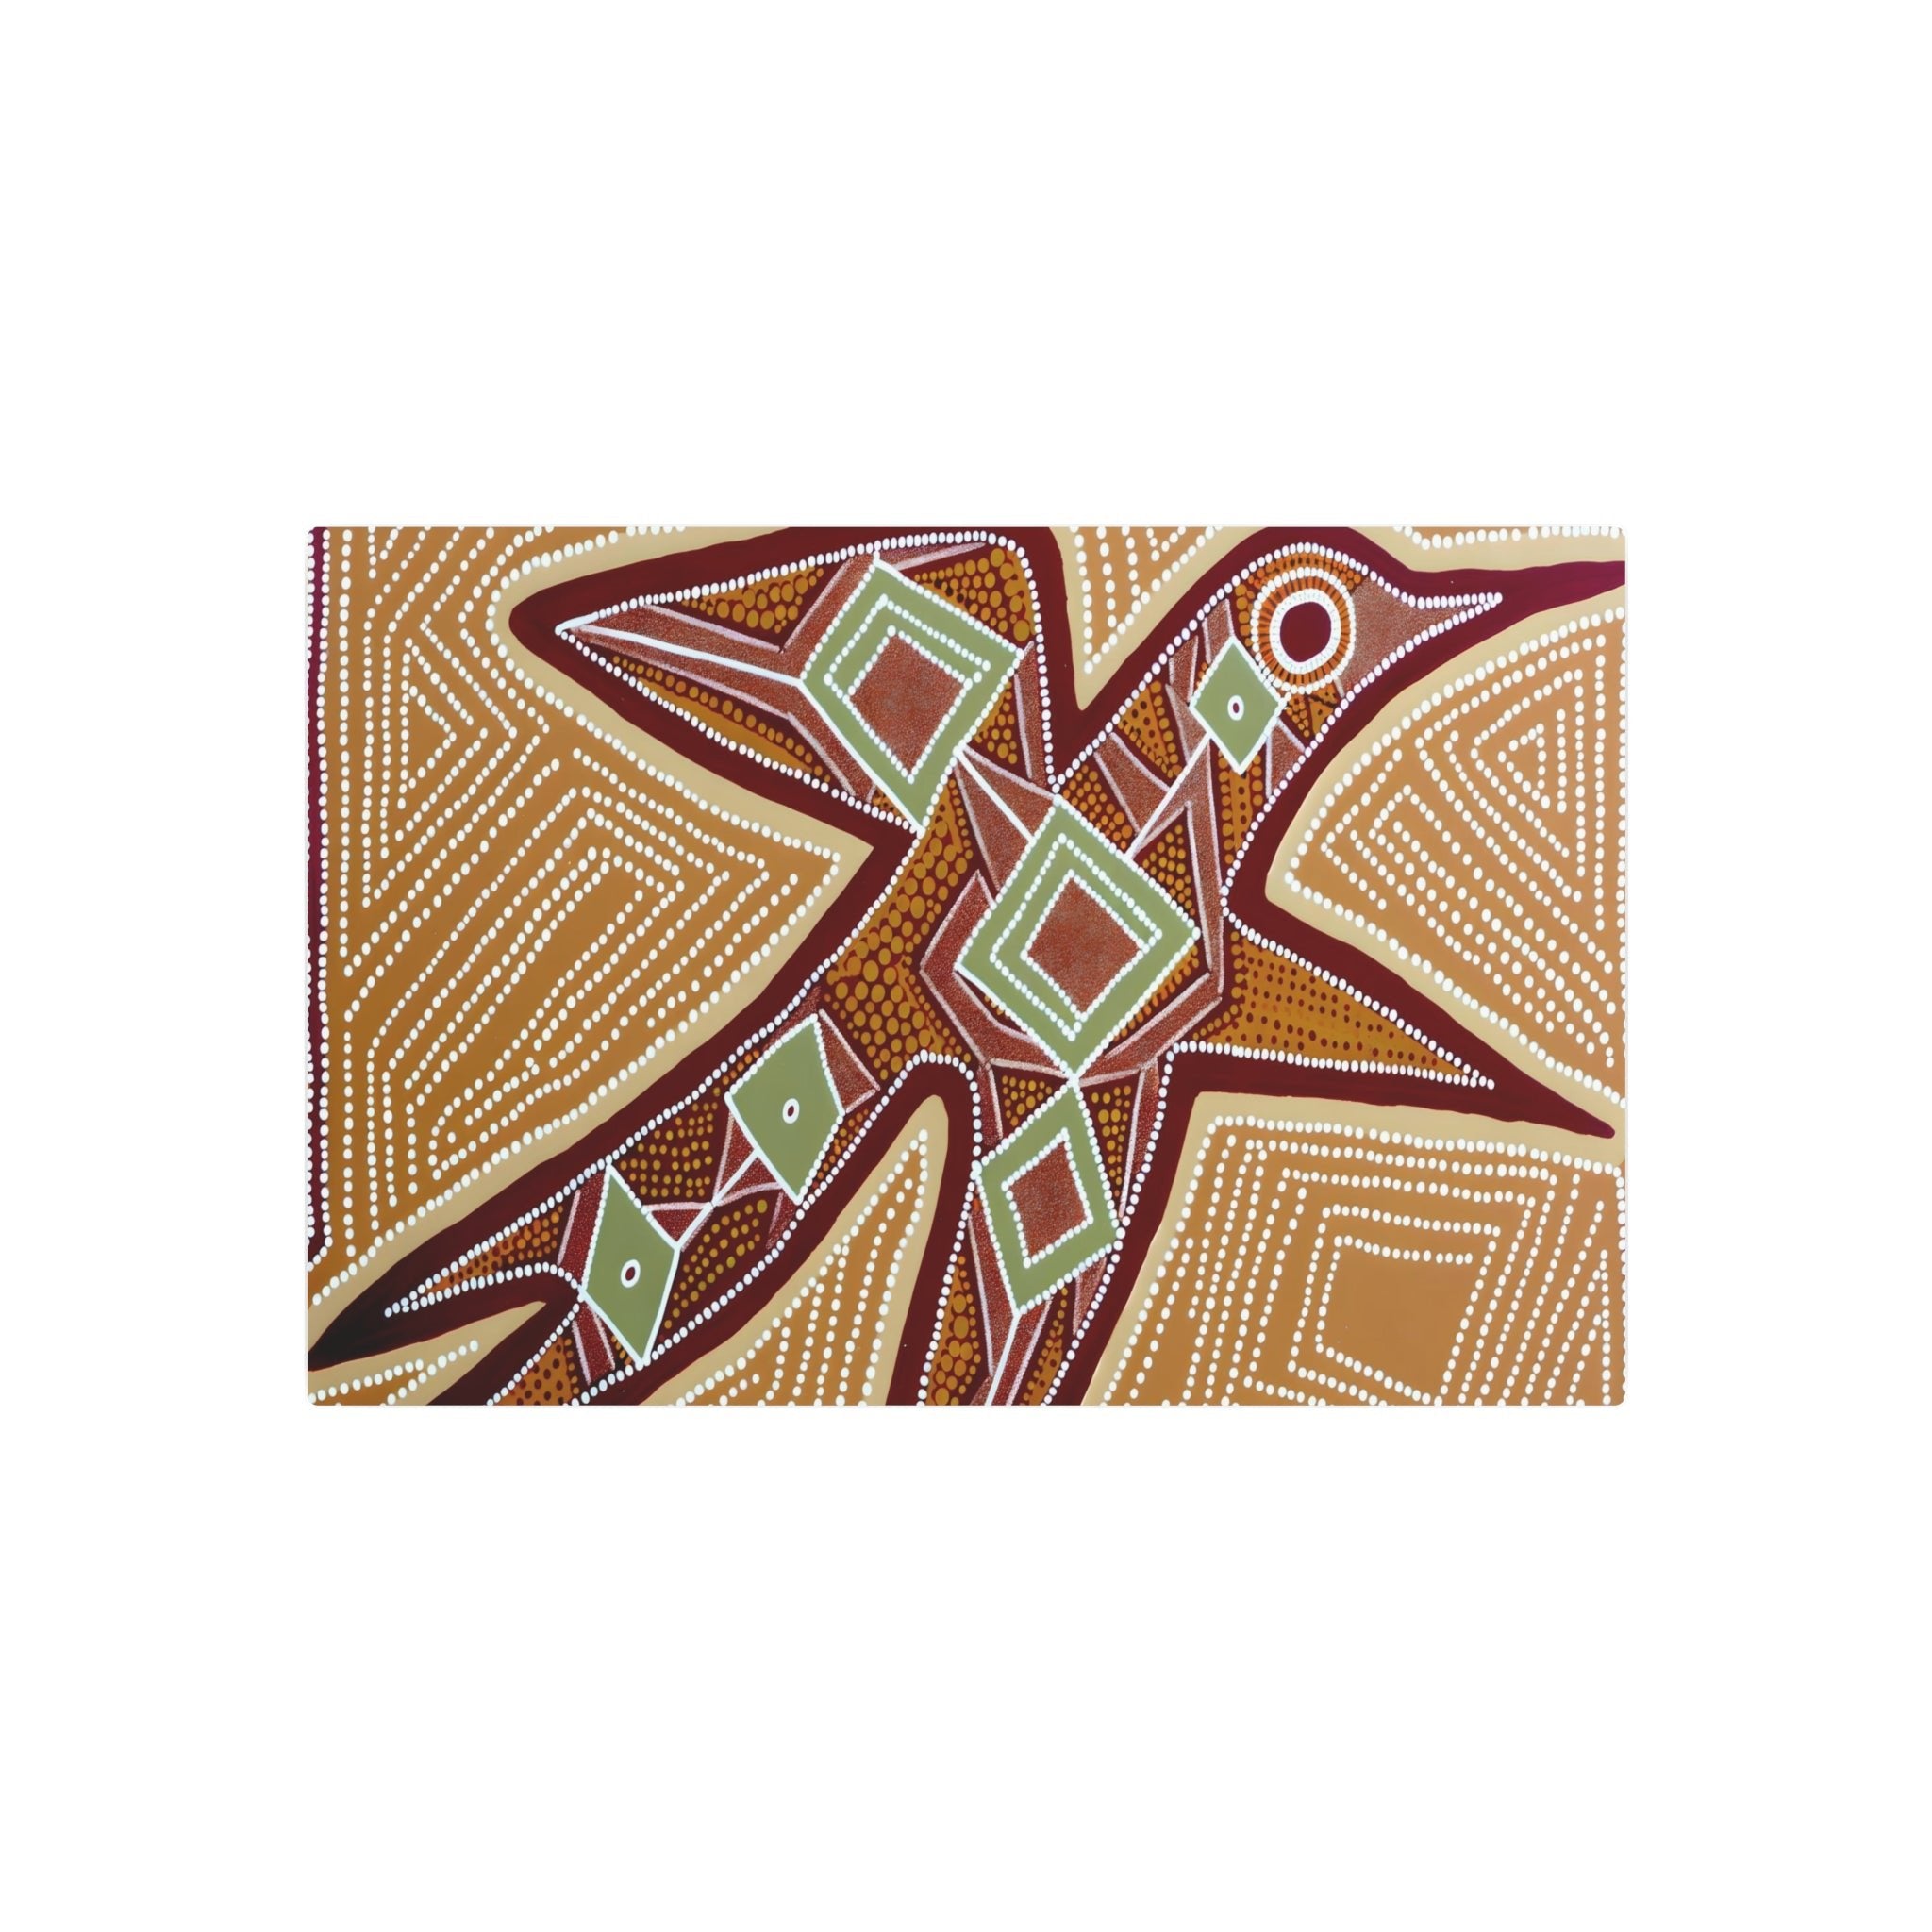 Metal Poster Art | "Australian Aboriginal Art Inspired Bird Image - Dot Painting & Earth-Tone Patterns in Non-Western & Global Styles" - Metal Poster Art 30″ x 20″ (Horizontal) 0.12''